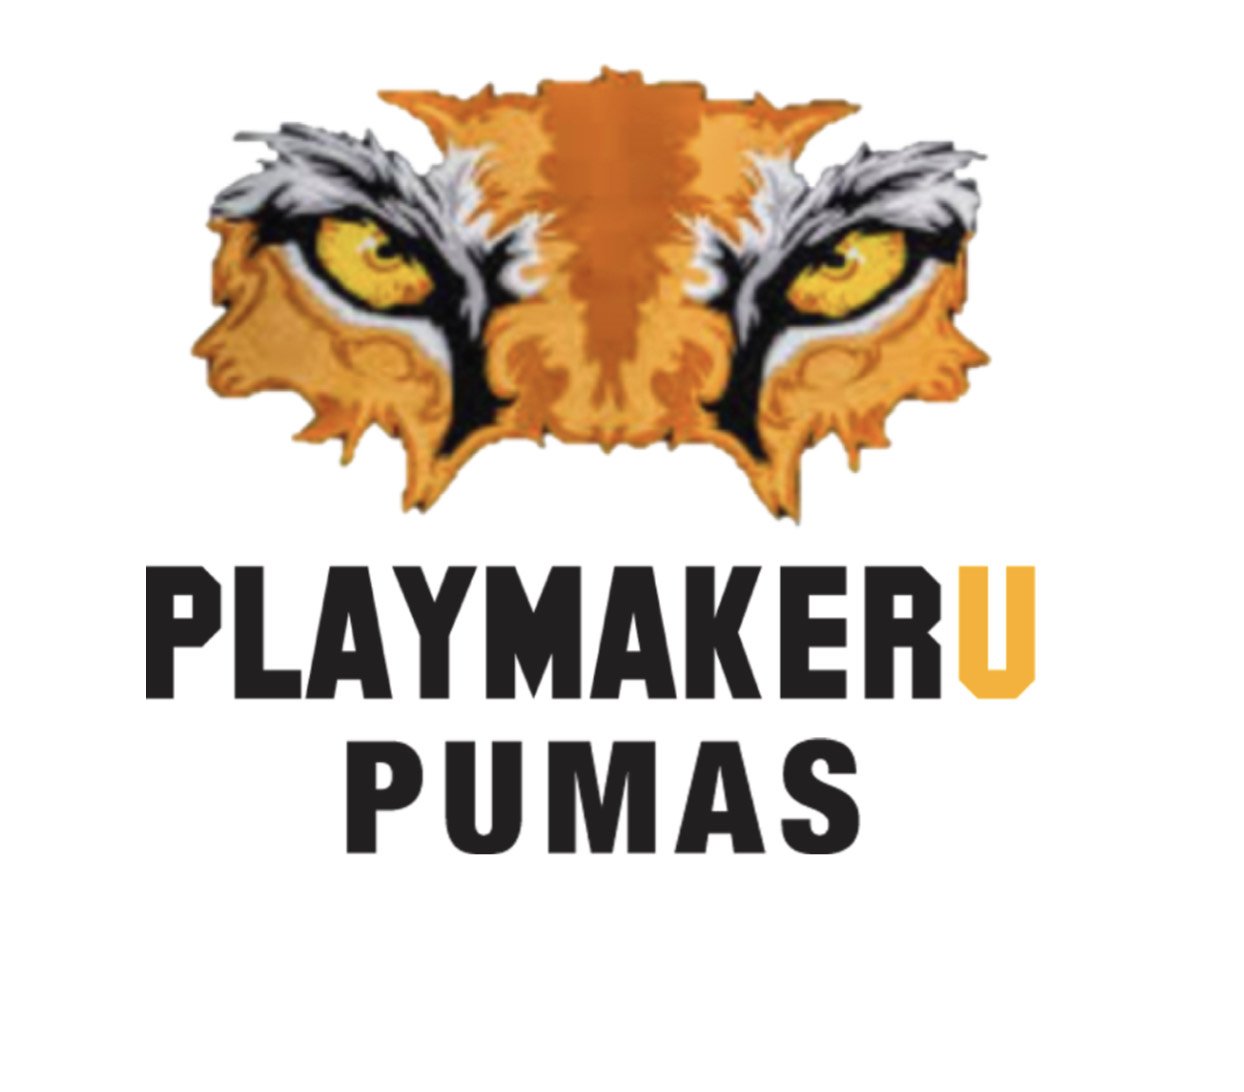 playmakeru pumas logo.jpg